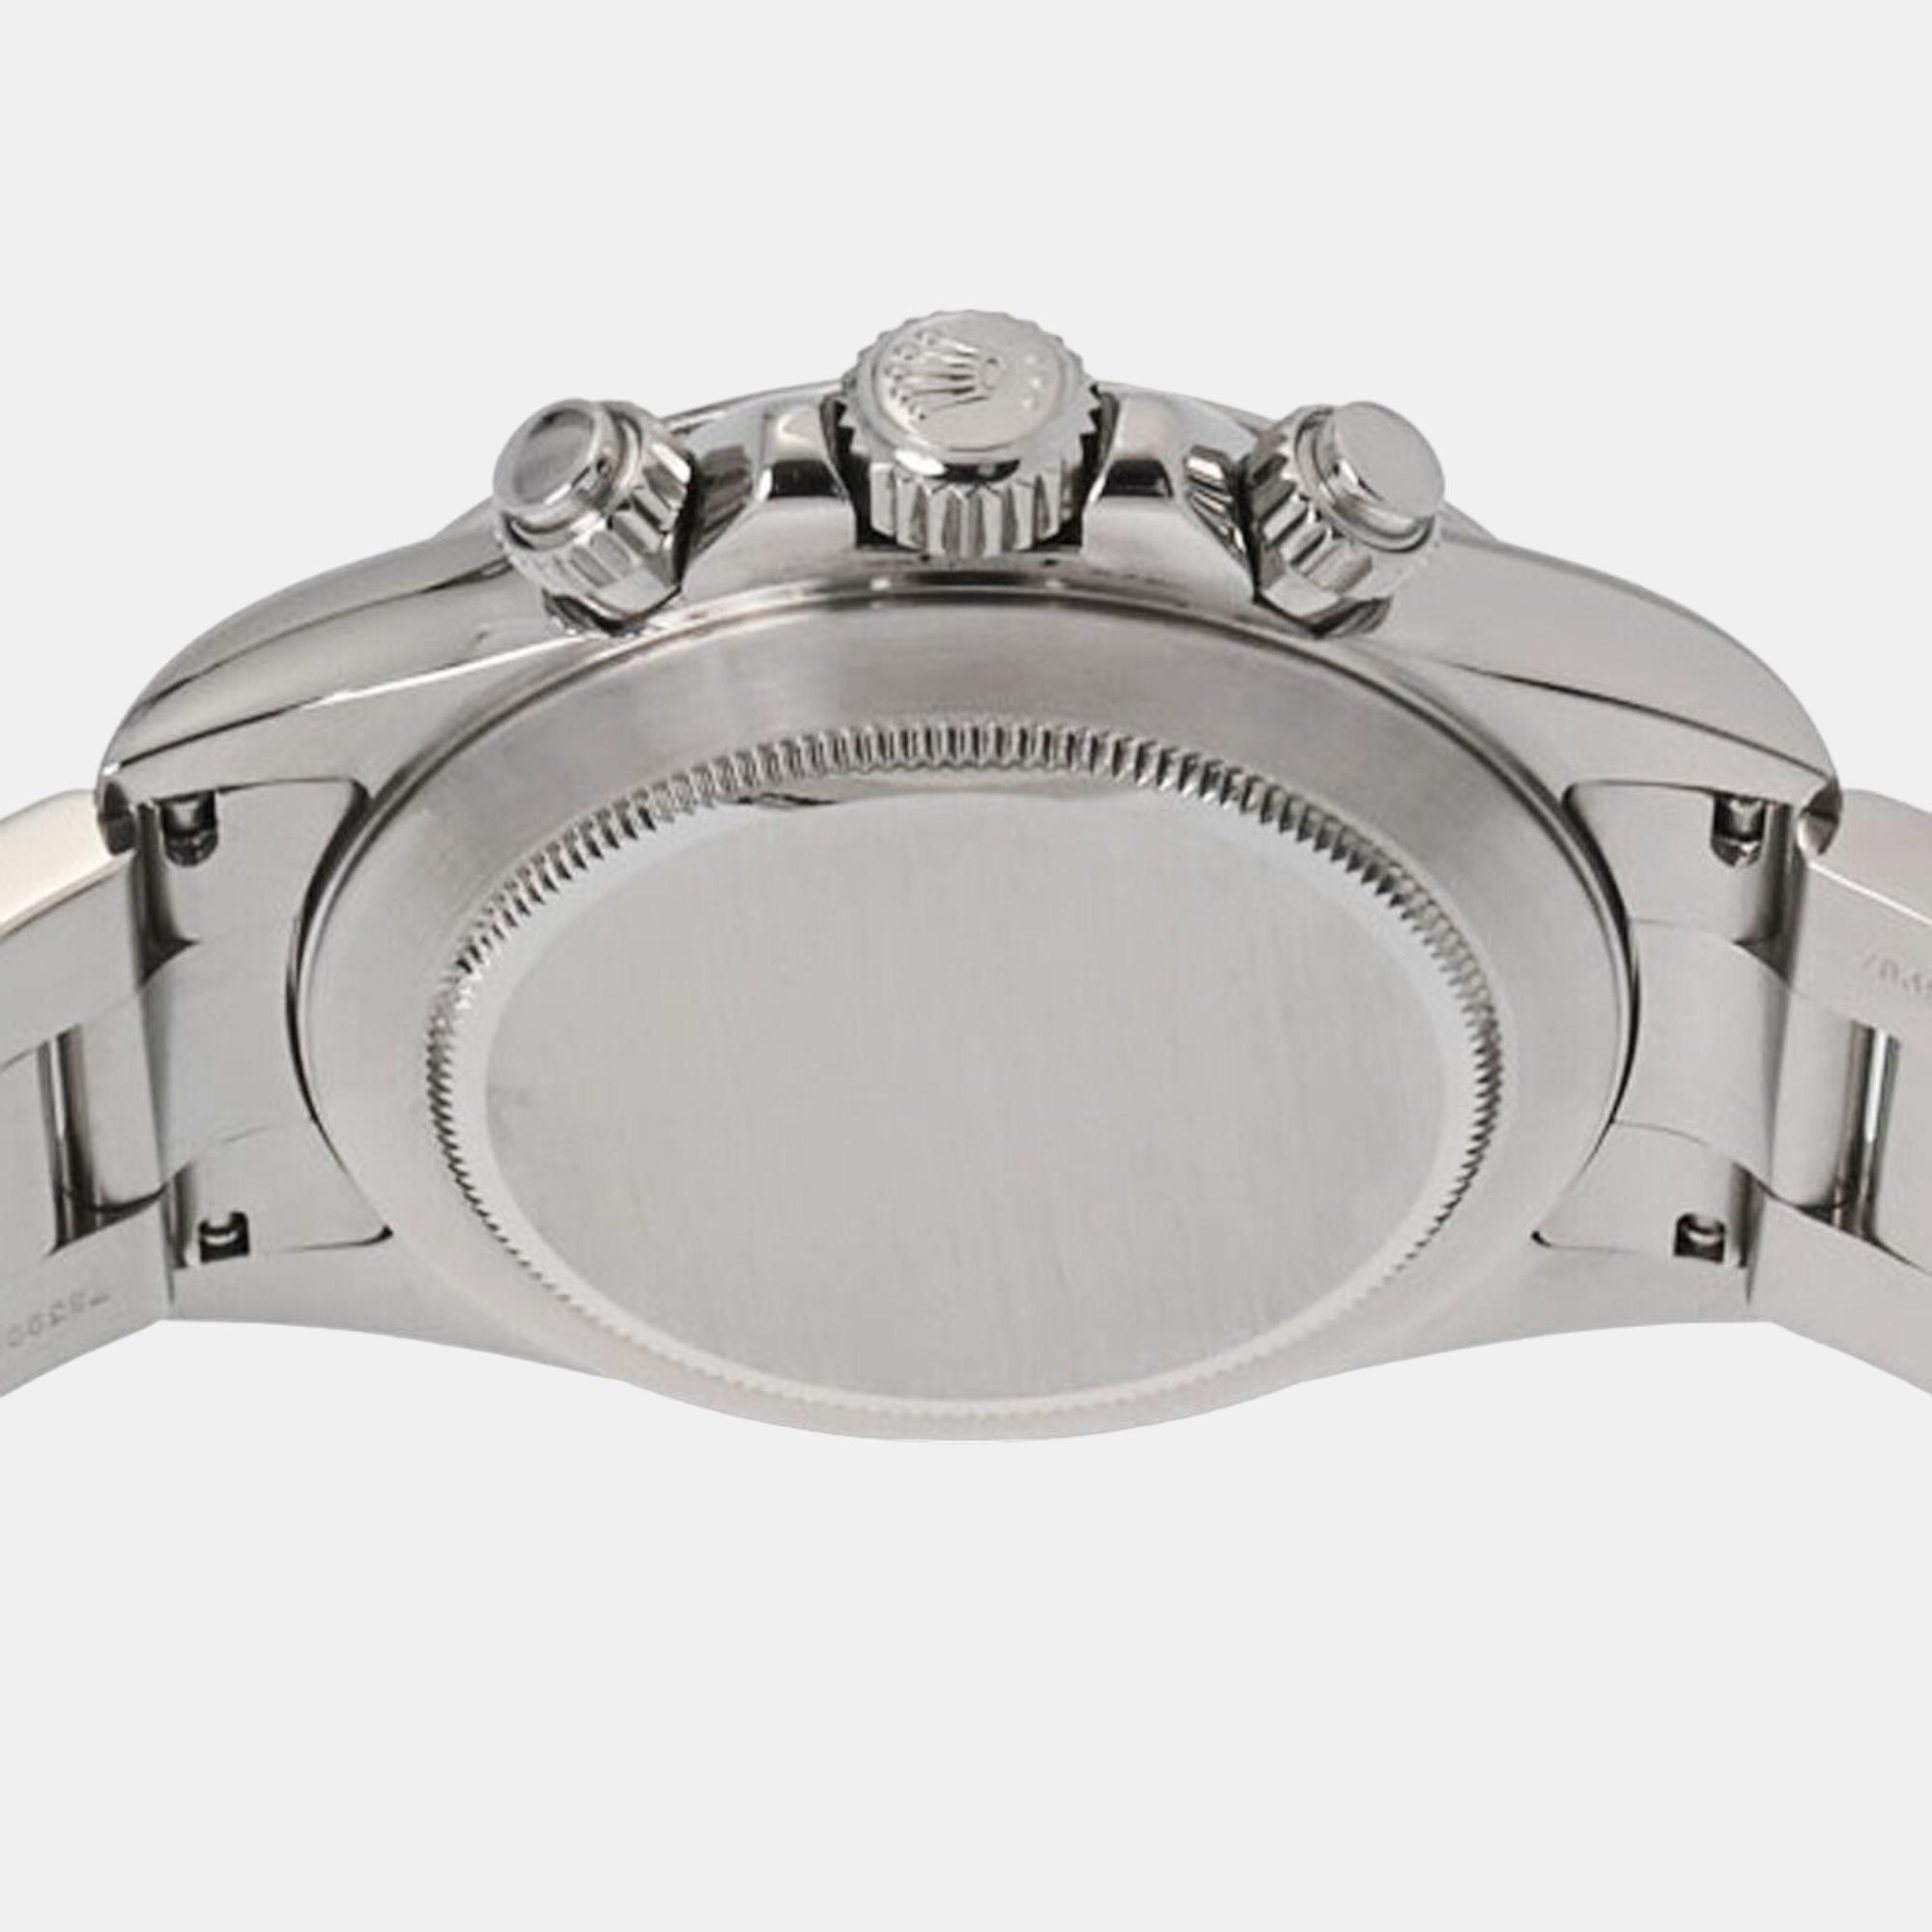 Rolex Black Stainless Steel Cosmograph Daytona 16520 Automatic Men's Wristwatch 40 Mm